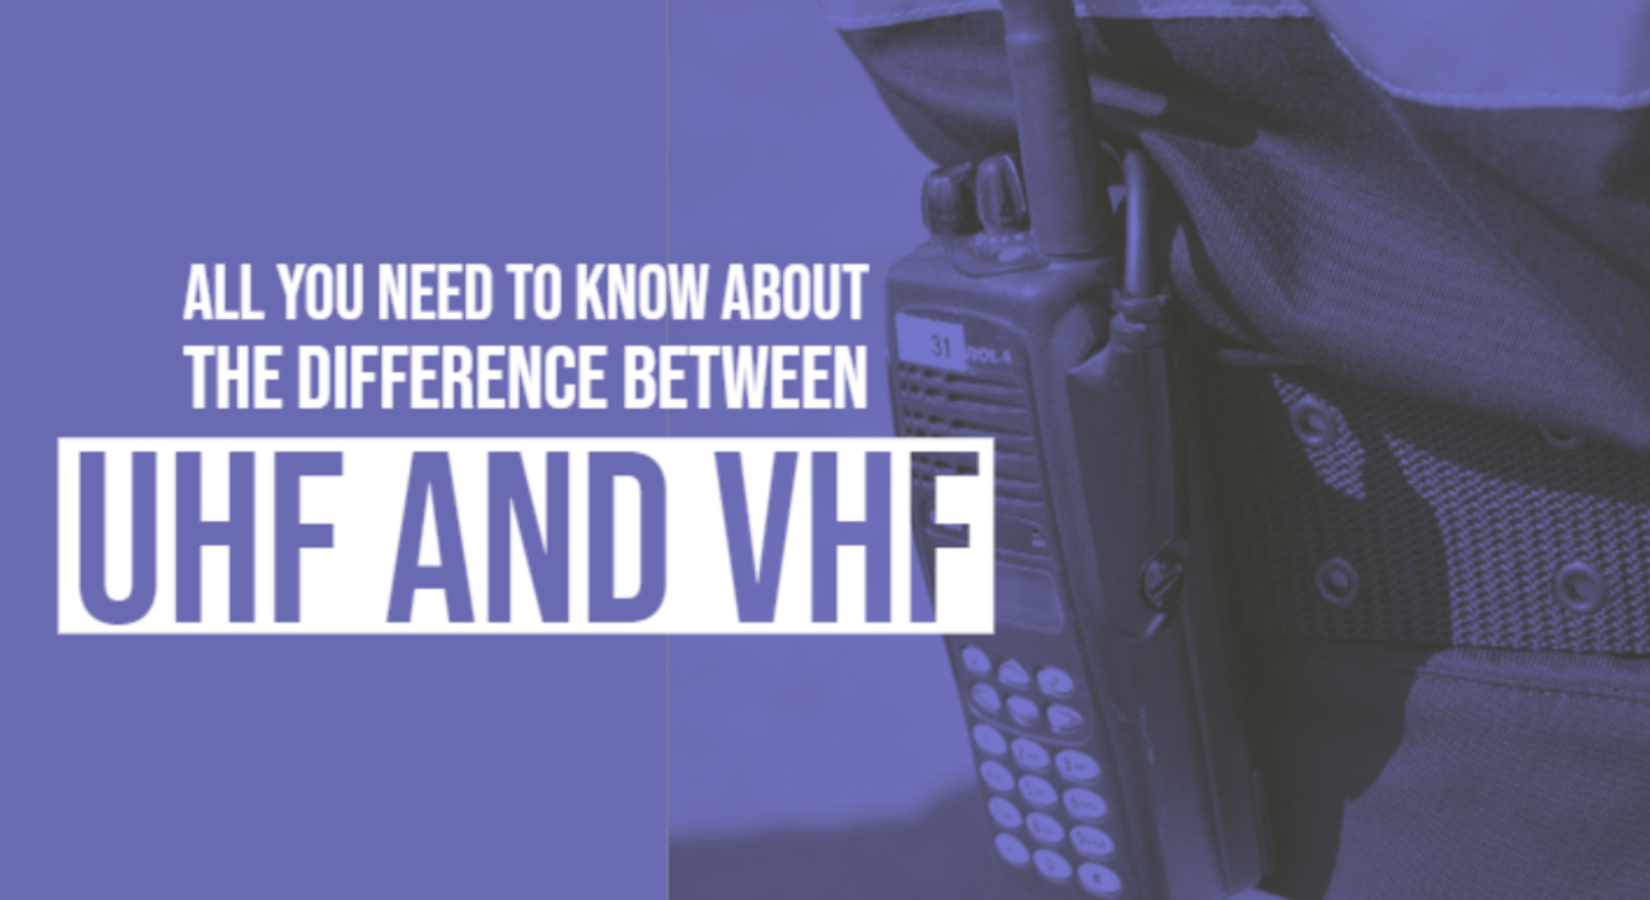 VHF vs UHF